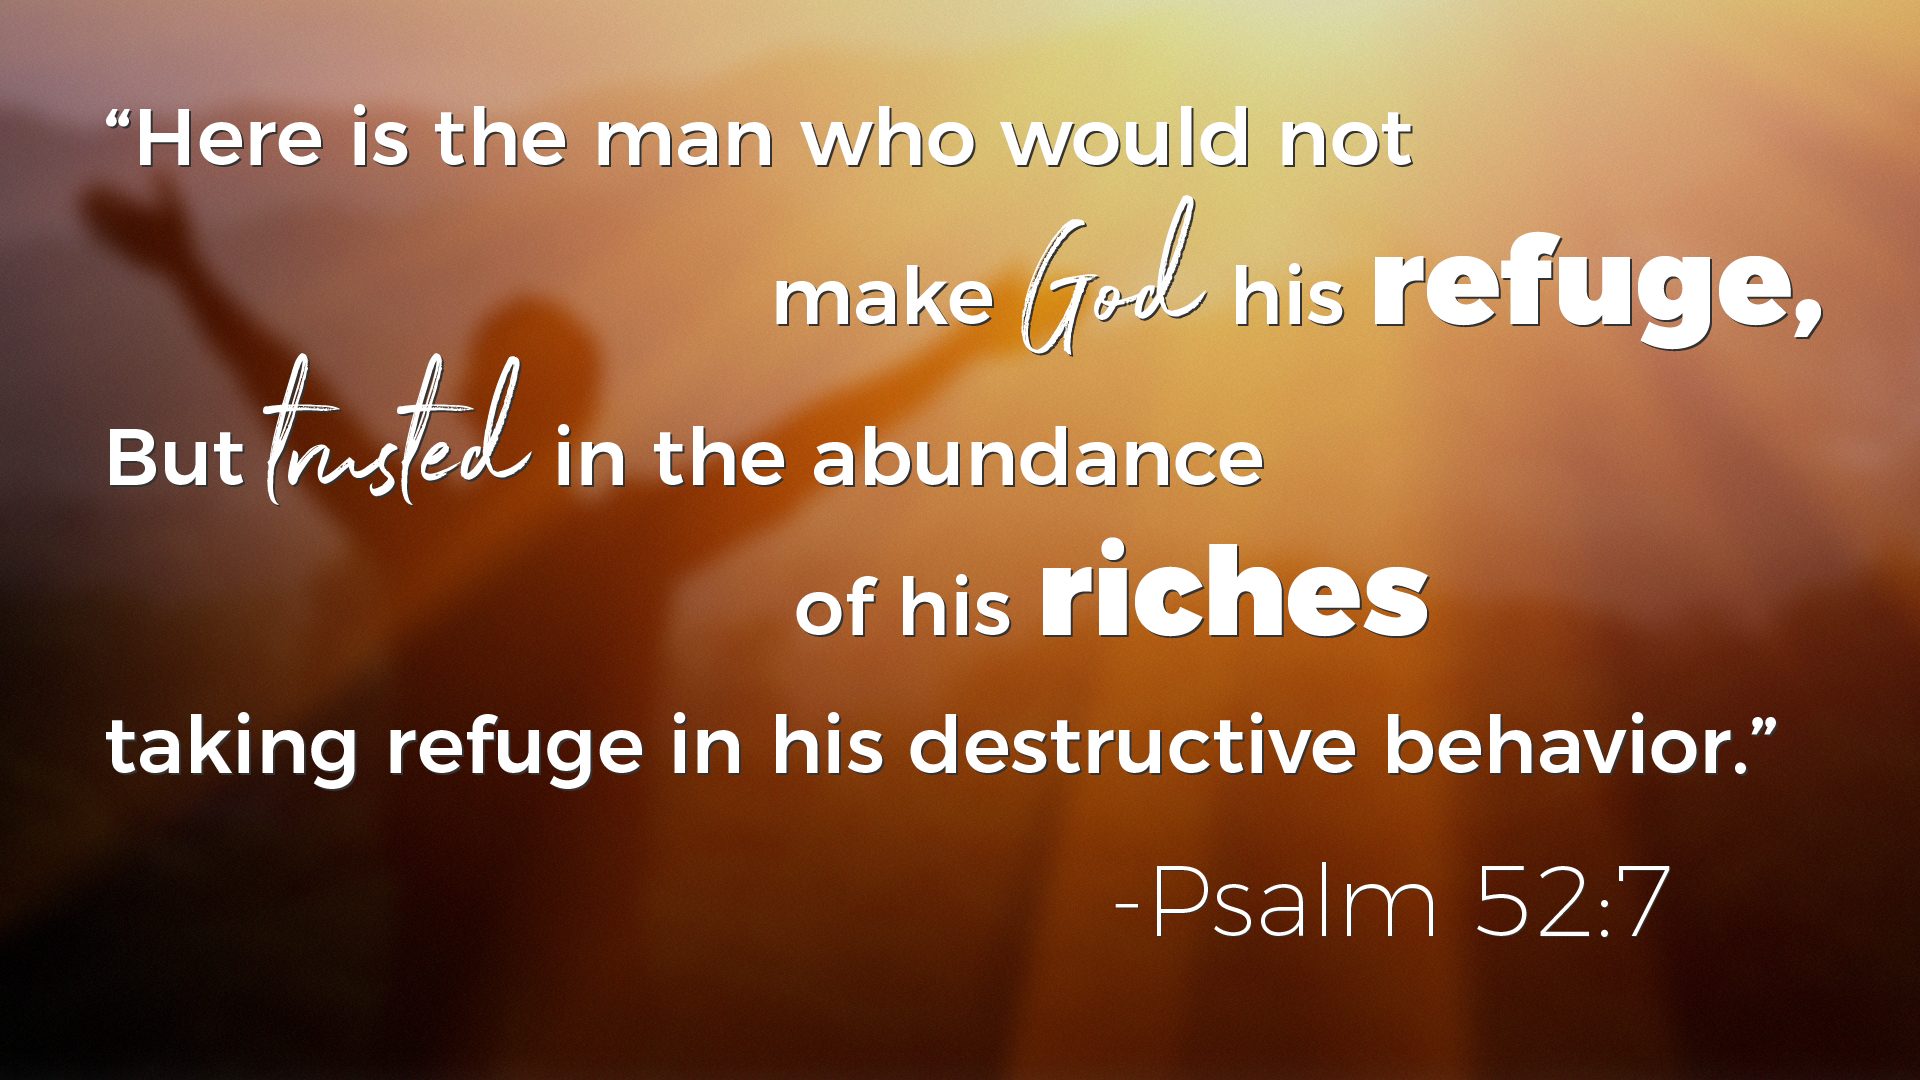 Psalms on Wealth - Psalm 52:7